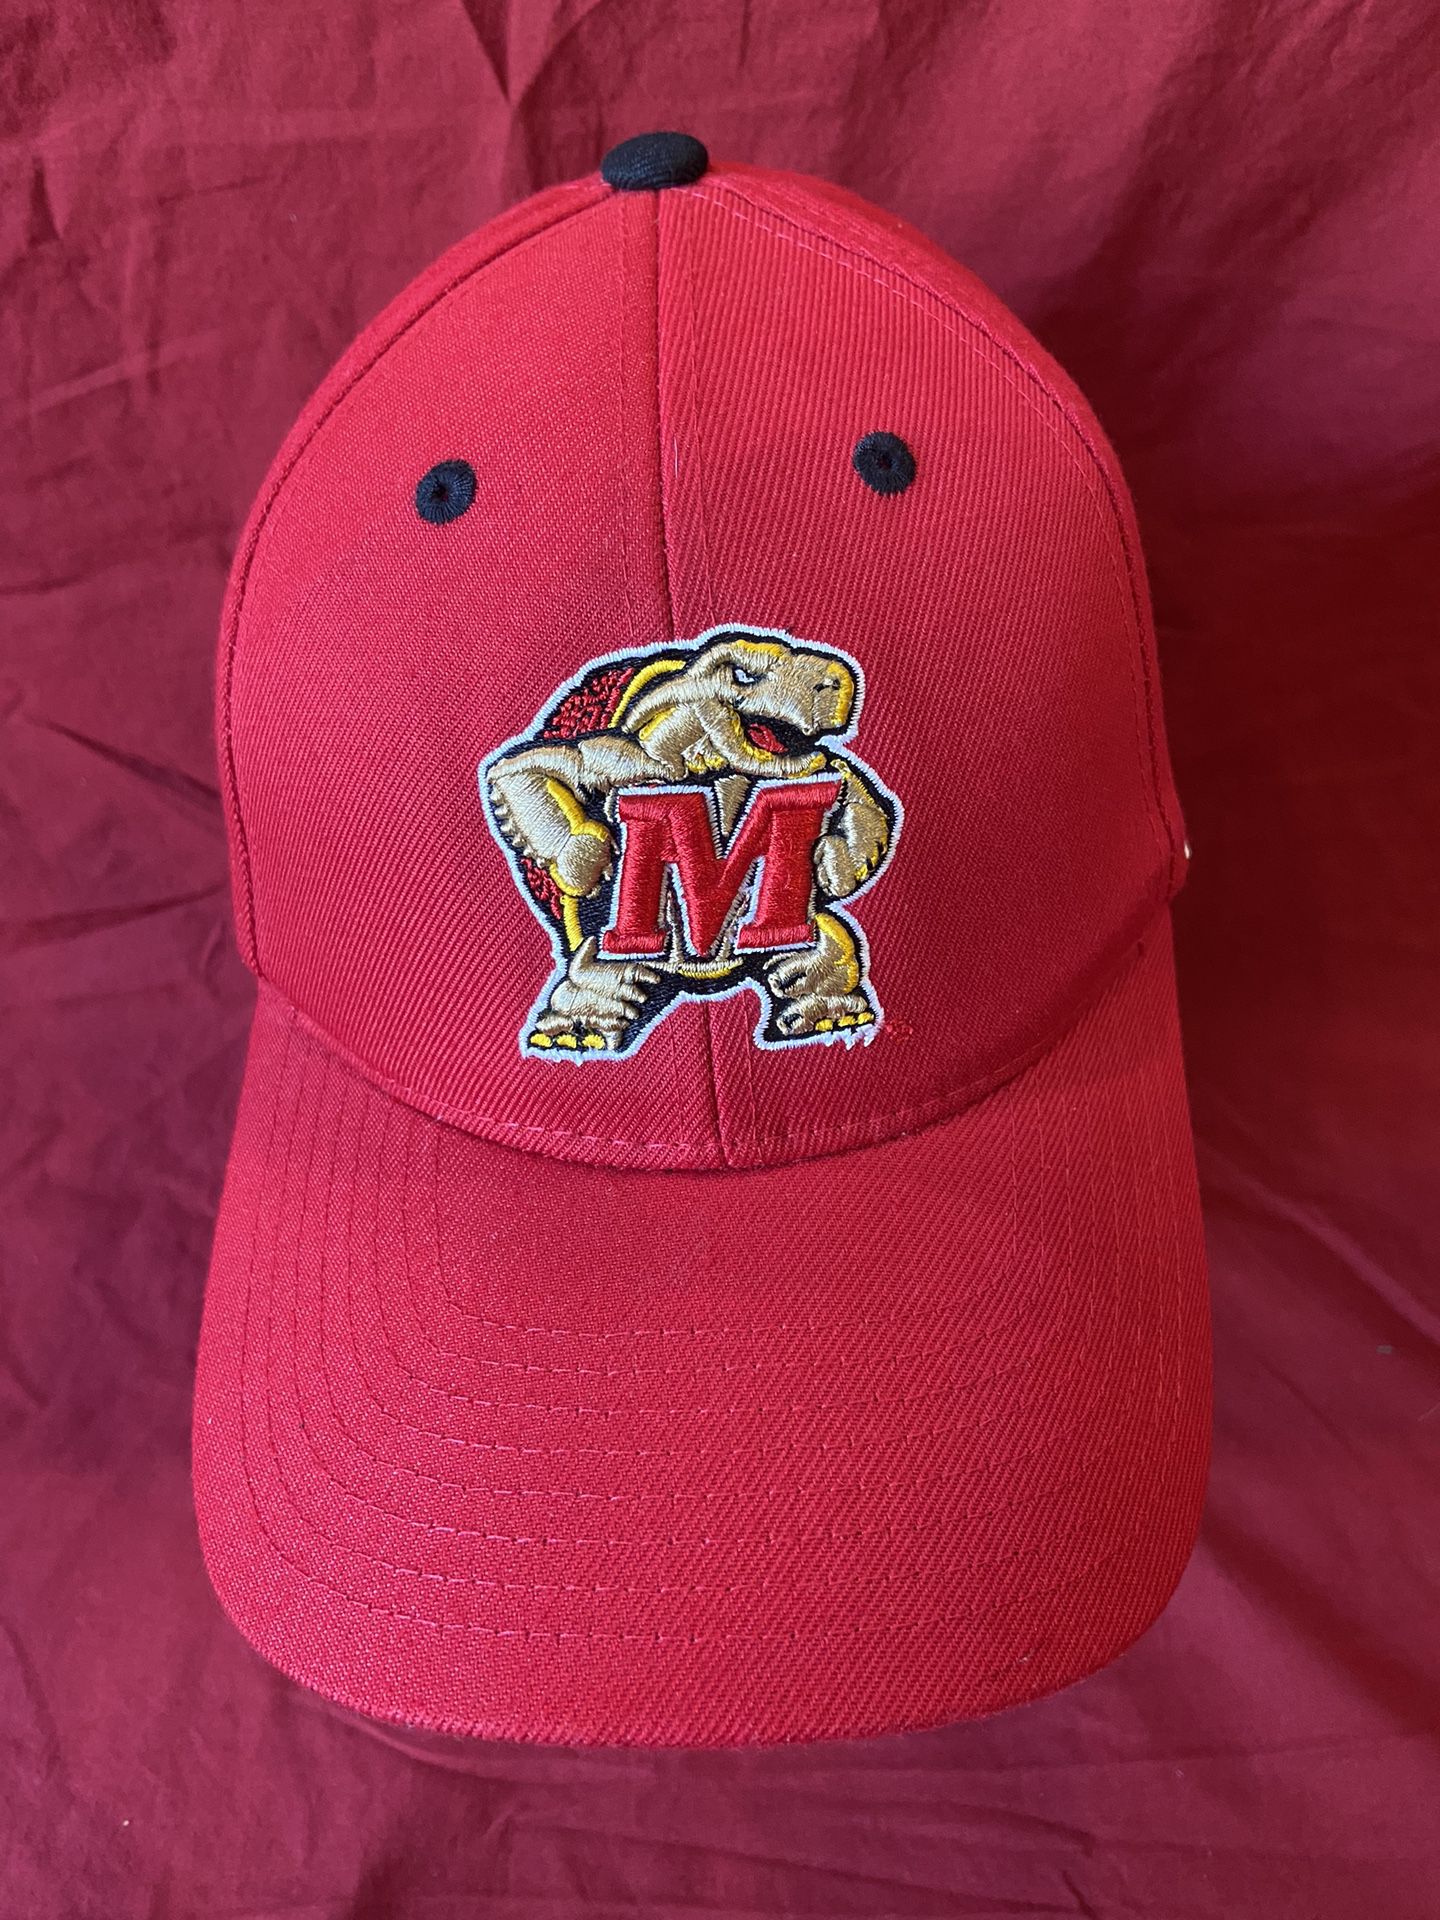 Men's Maryland Terrapins Zephyr Adjustable Hat Red